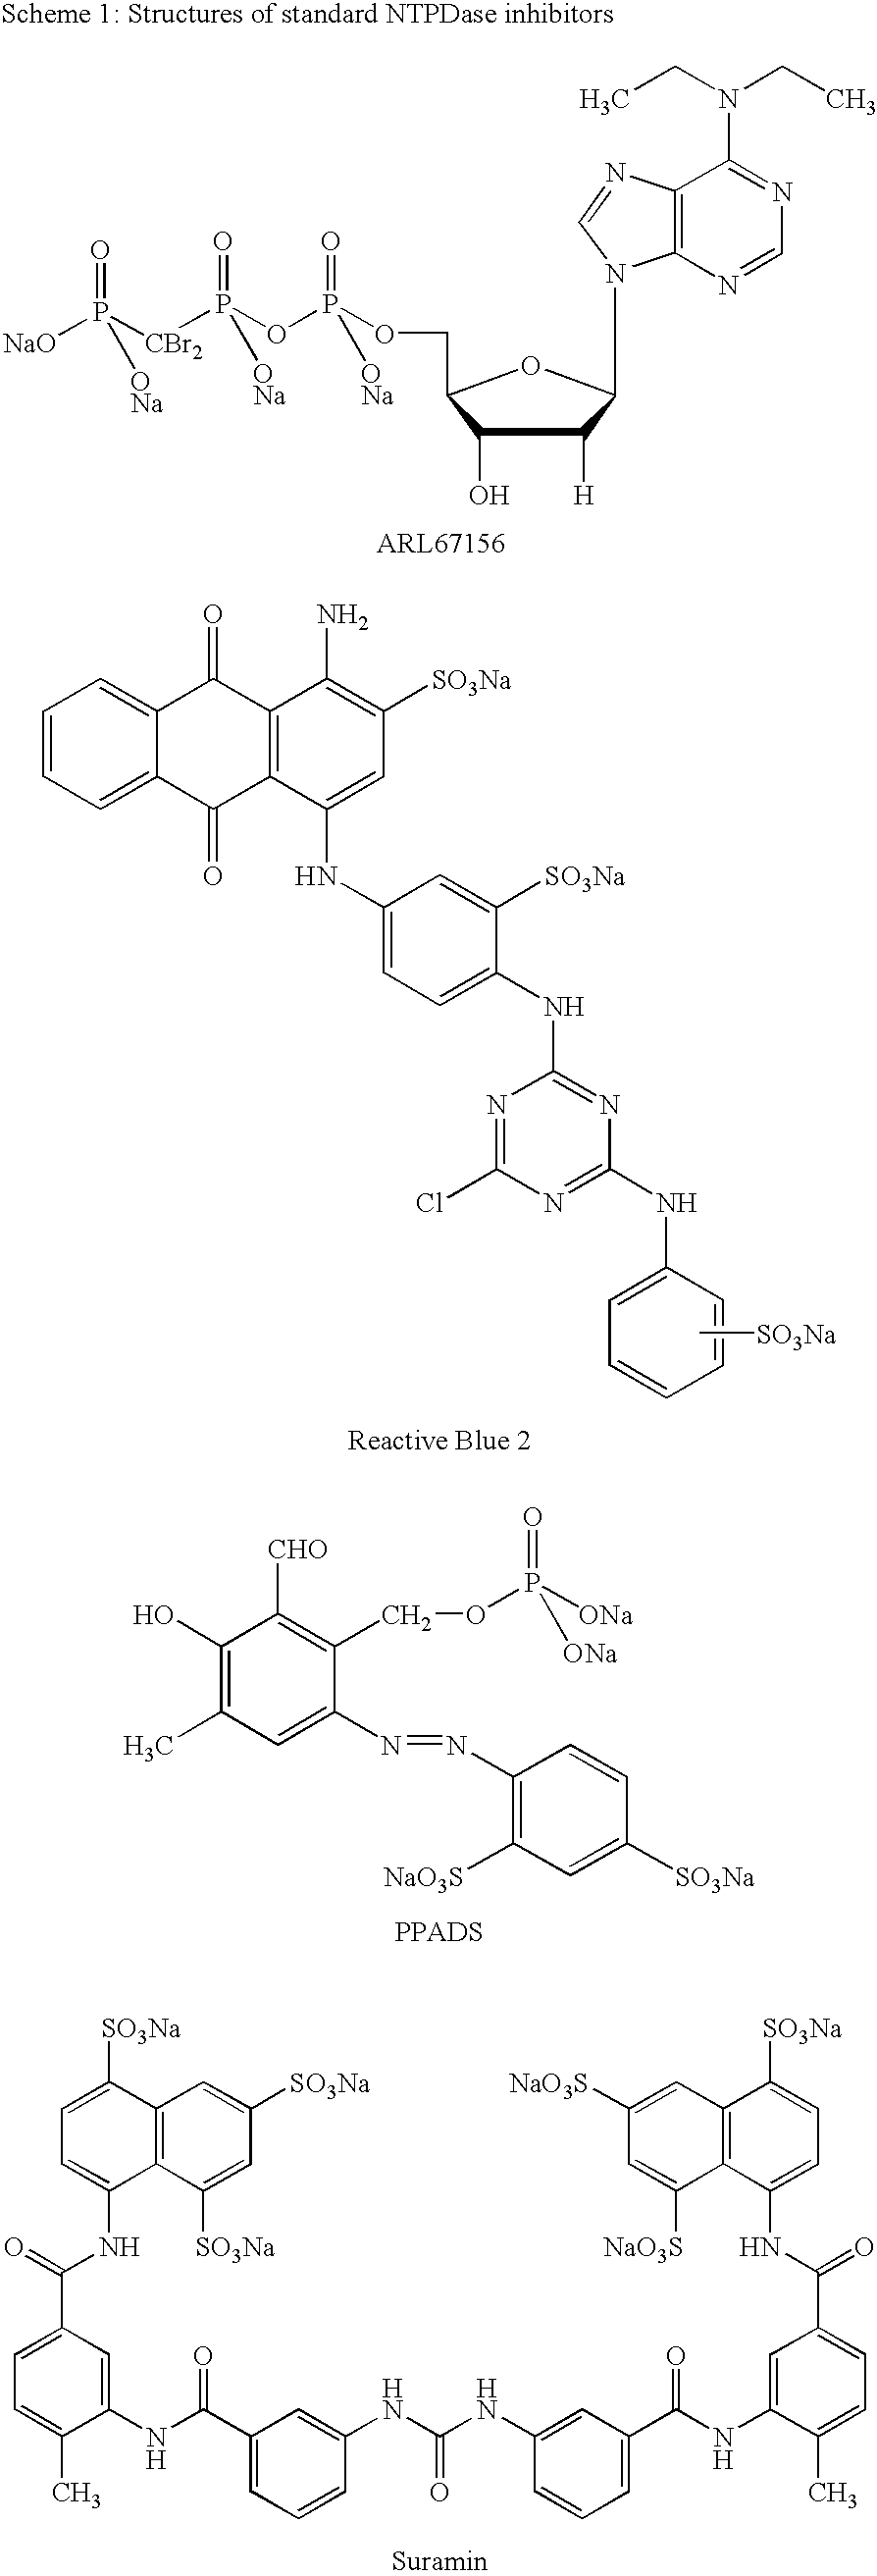 Ectonucleotidase inhibitors